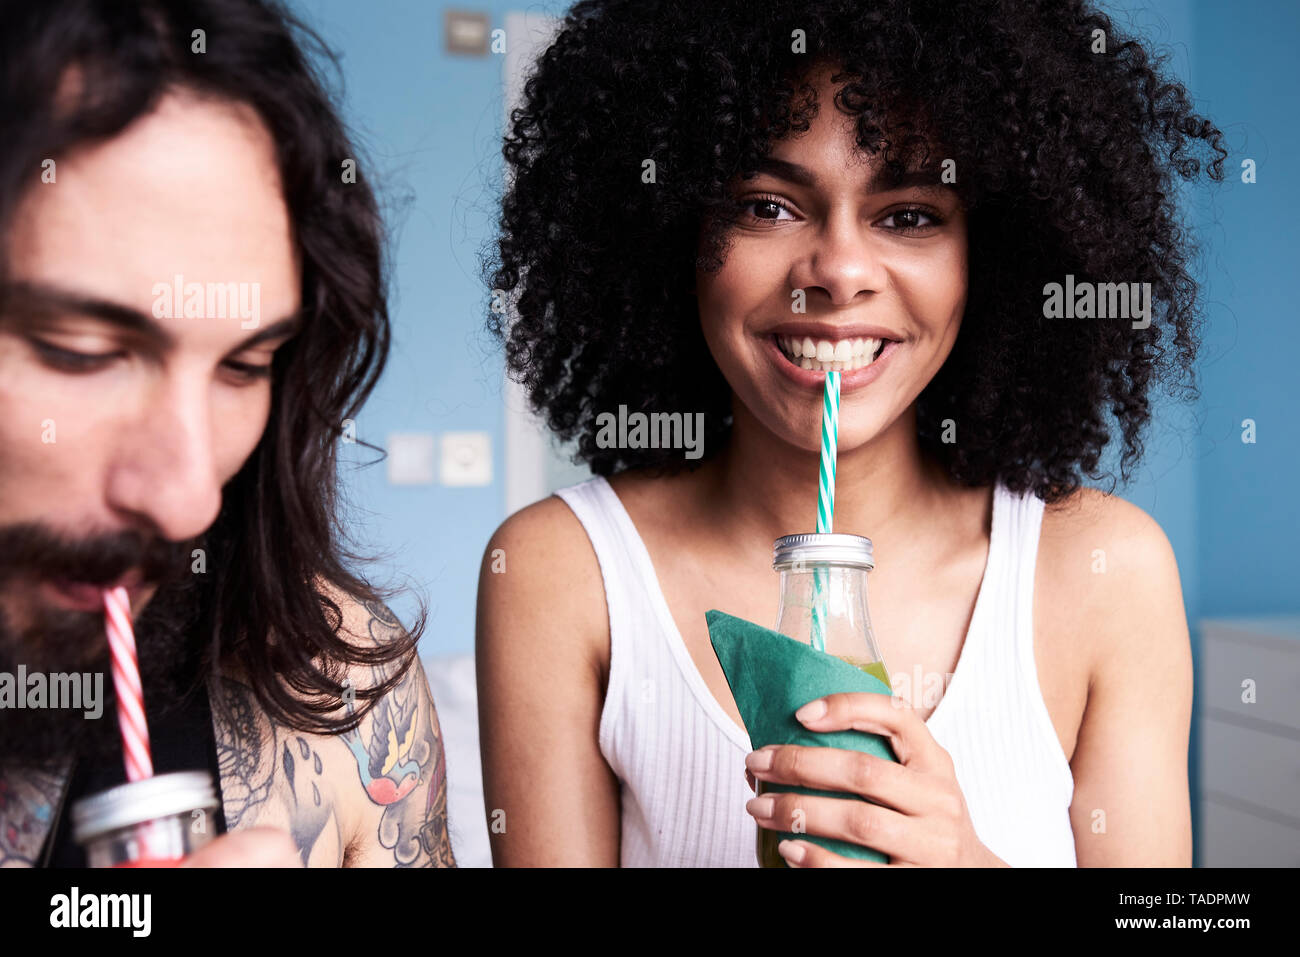 Portrait of smiling young woman with boyfriend smoothie potable Banque D'Images